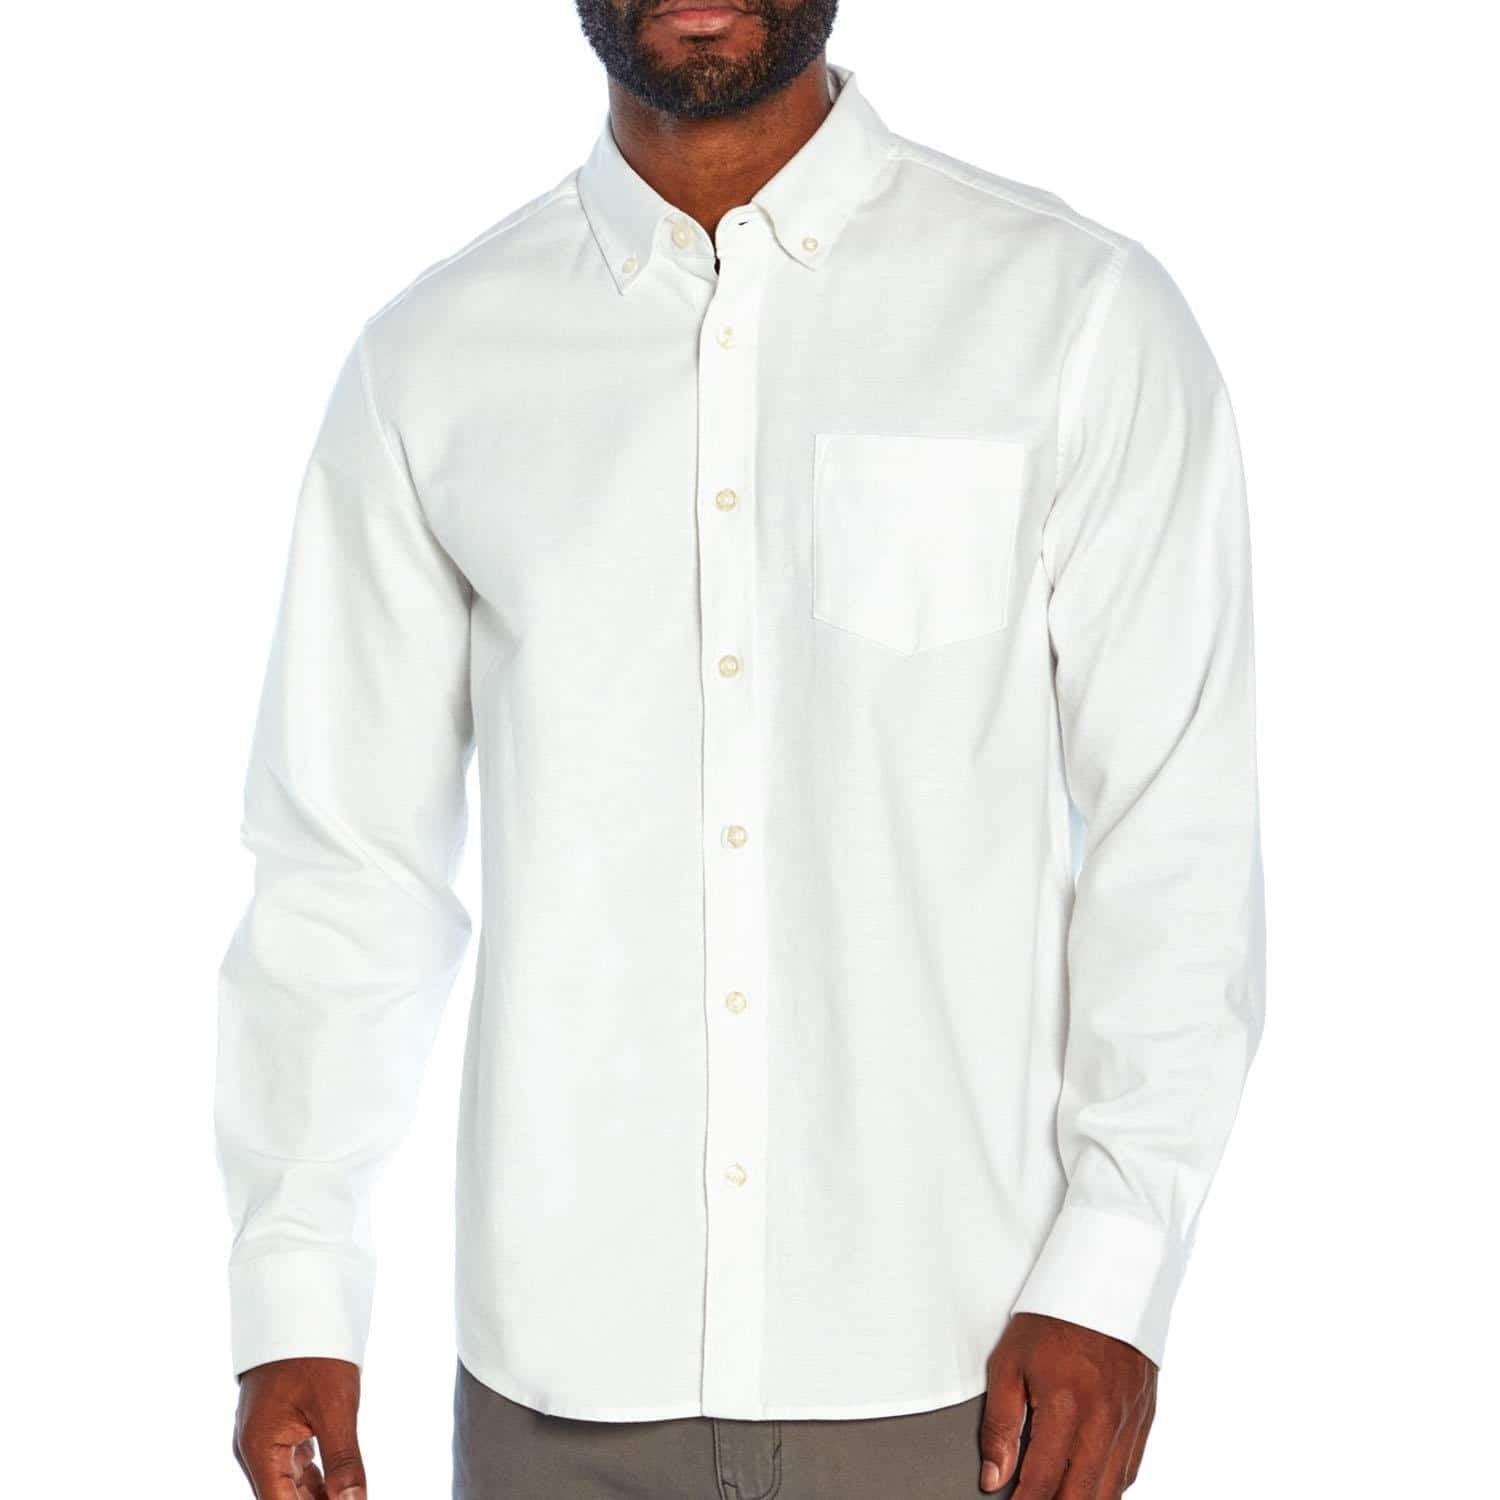 Gap Men's Long Sleeve Oxford Shirt - Grovano